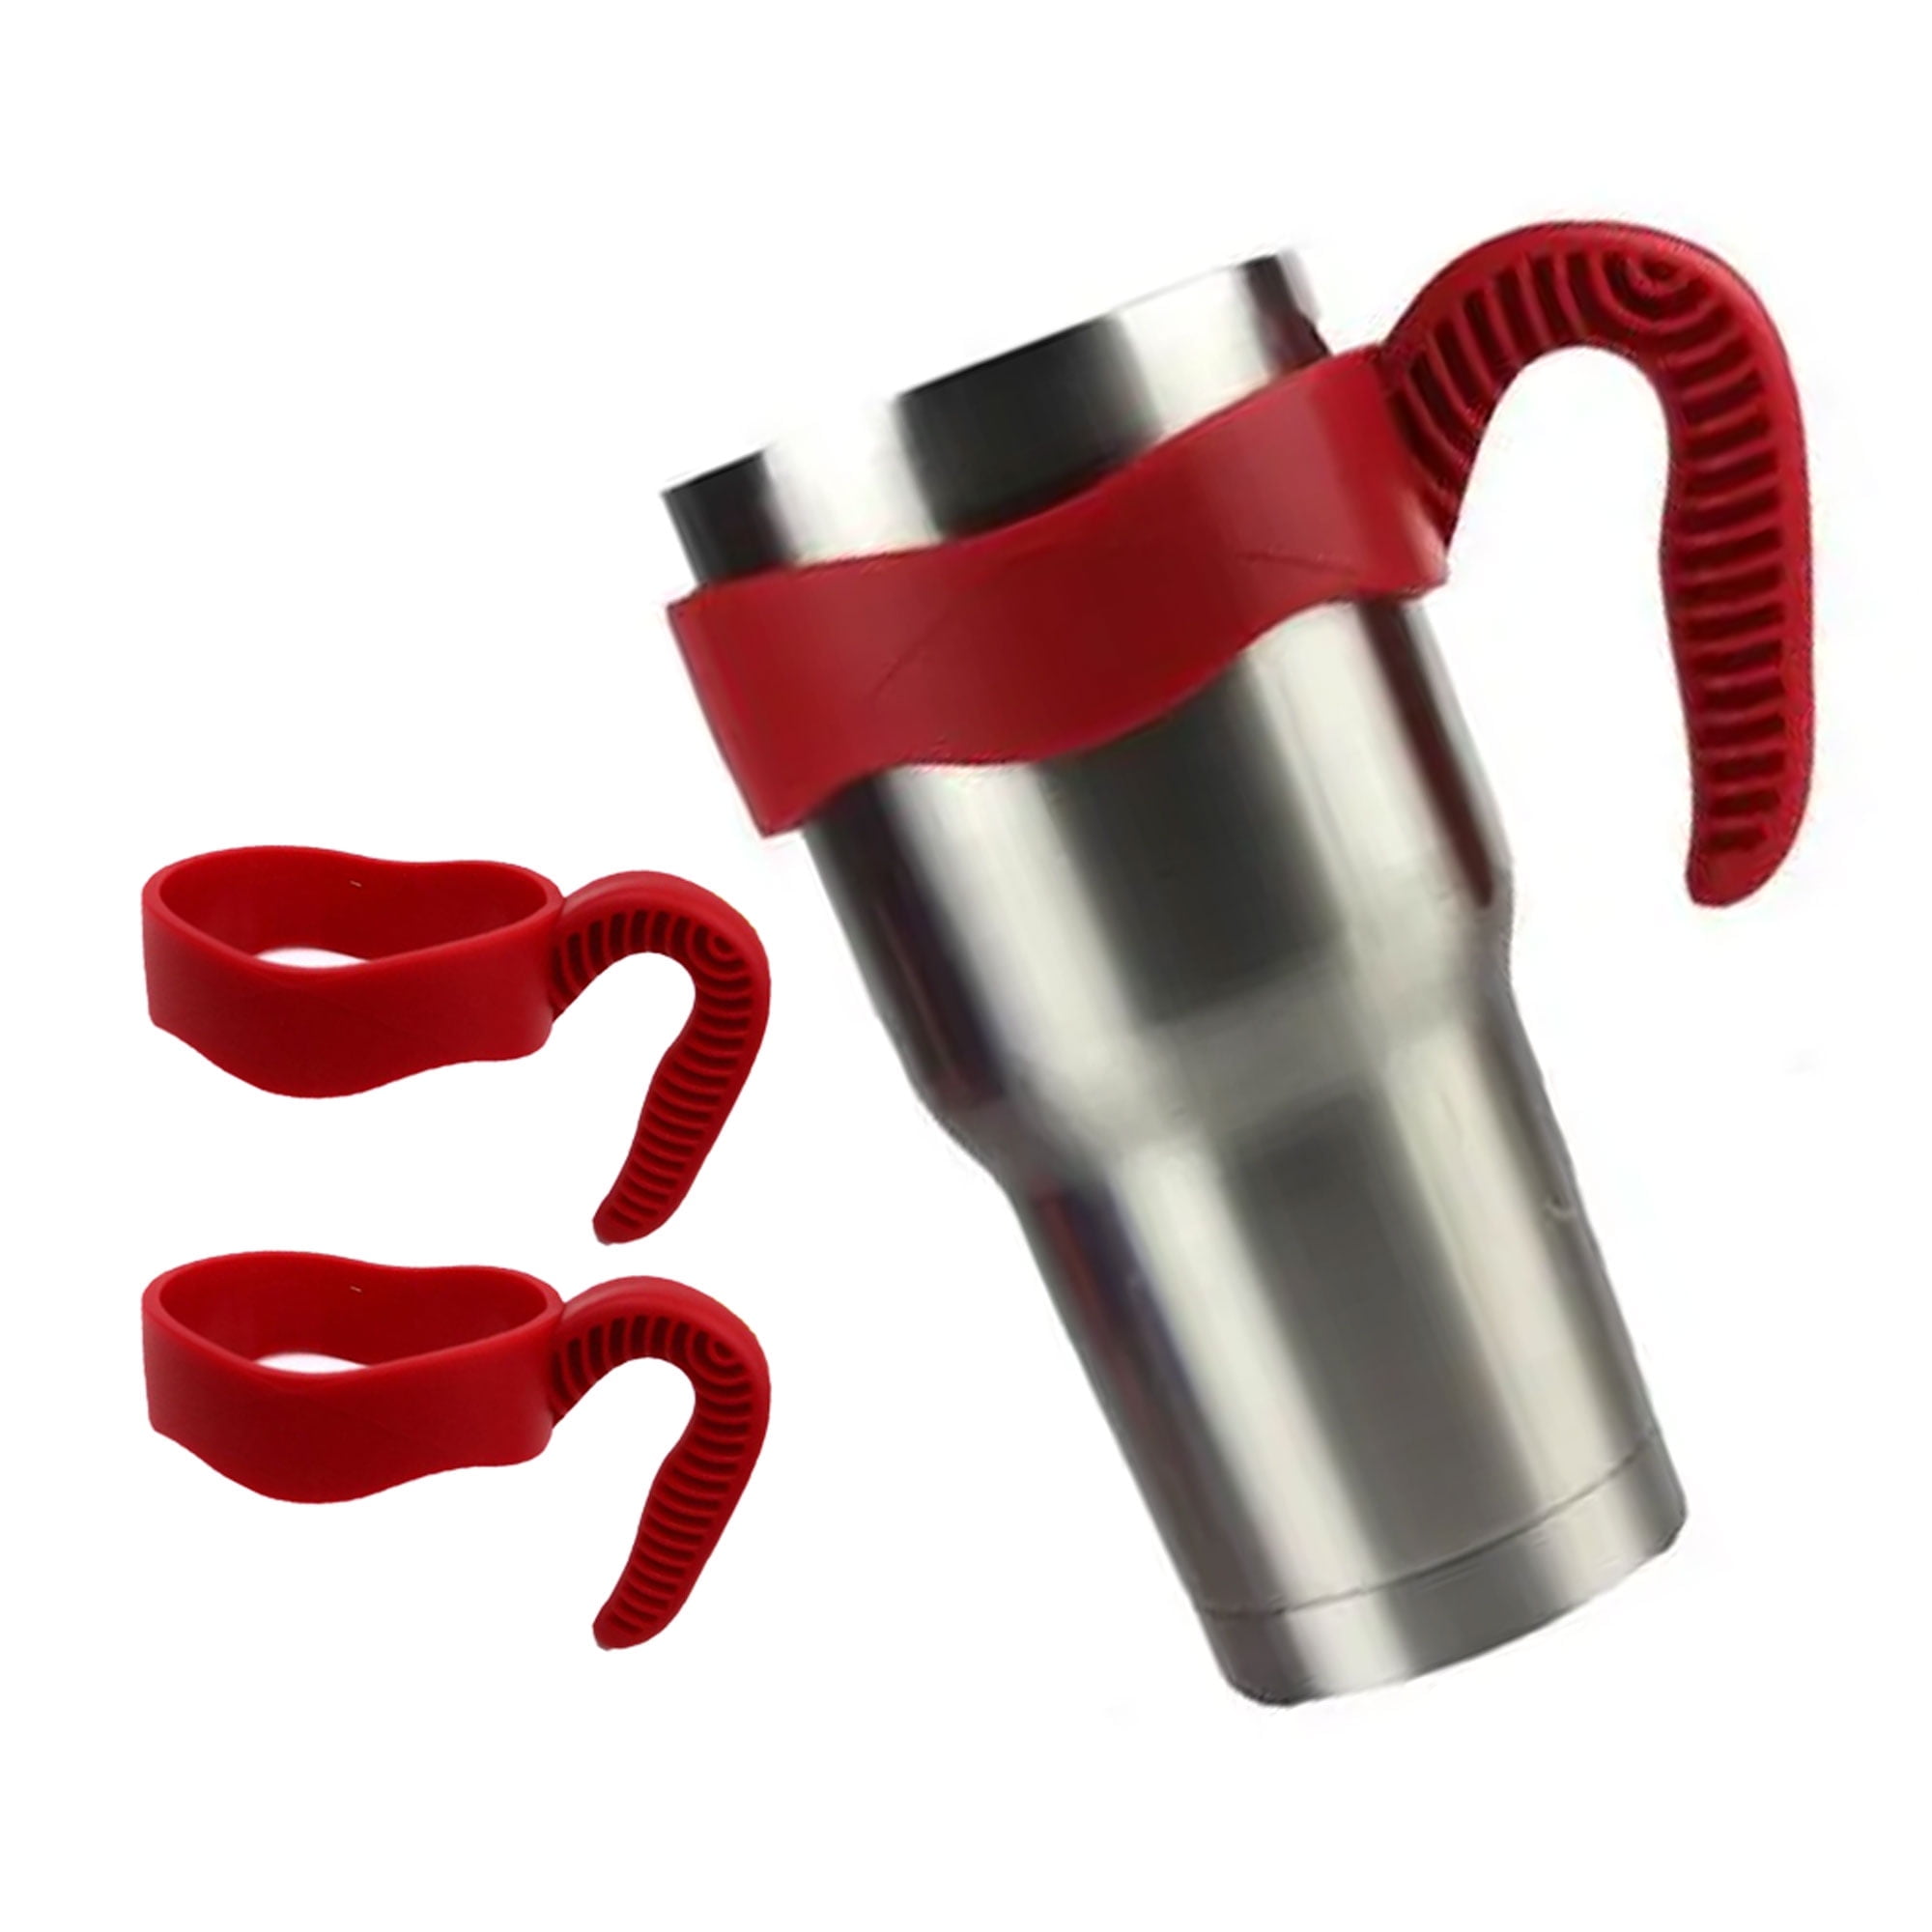 Tumbler Handles For , Rtic, Ozak Trail, Travel Mug Cup, Sic